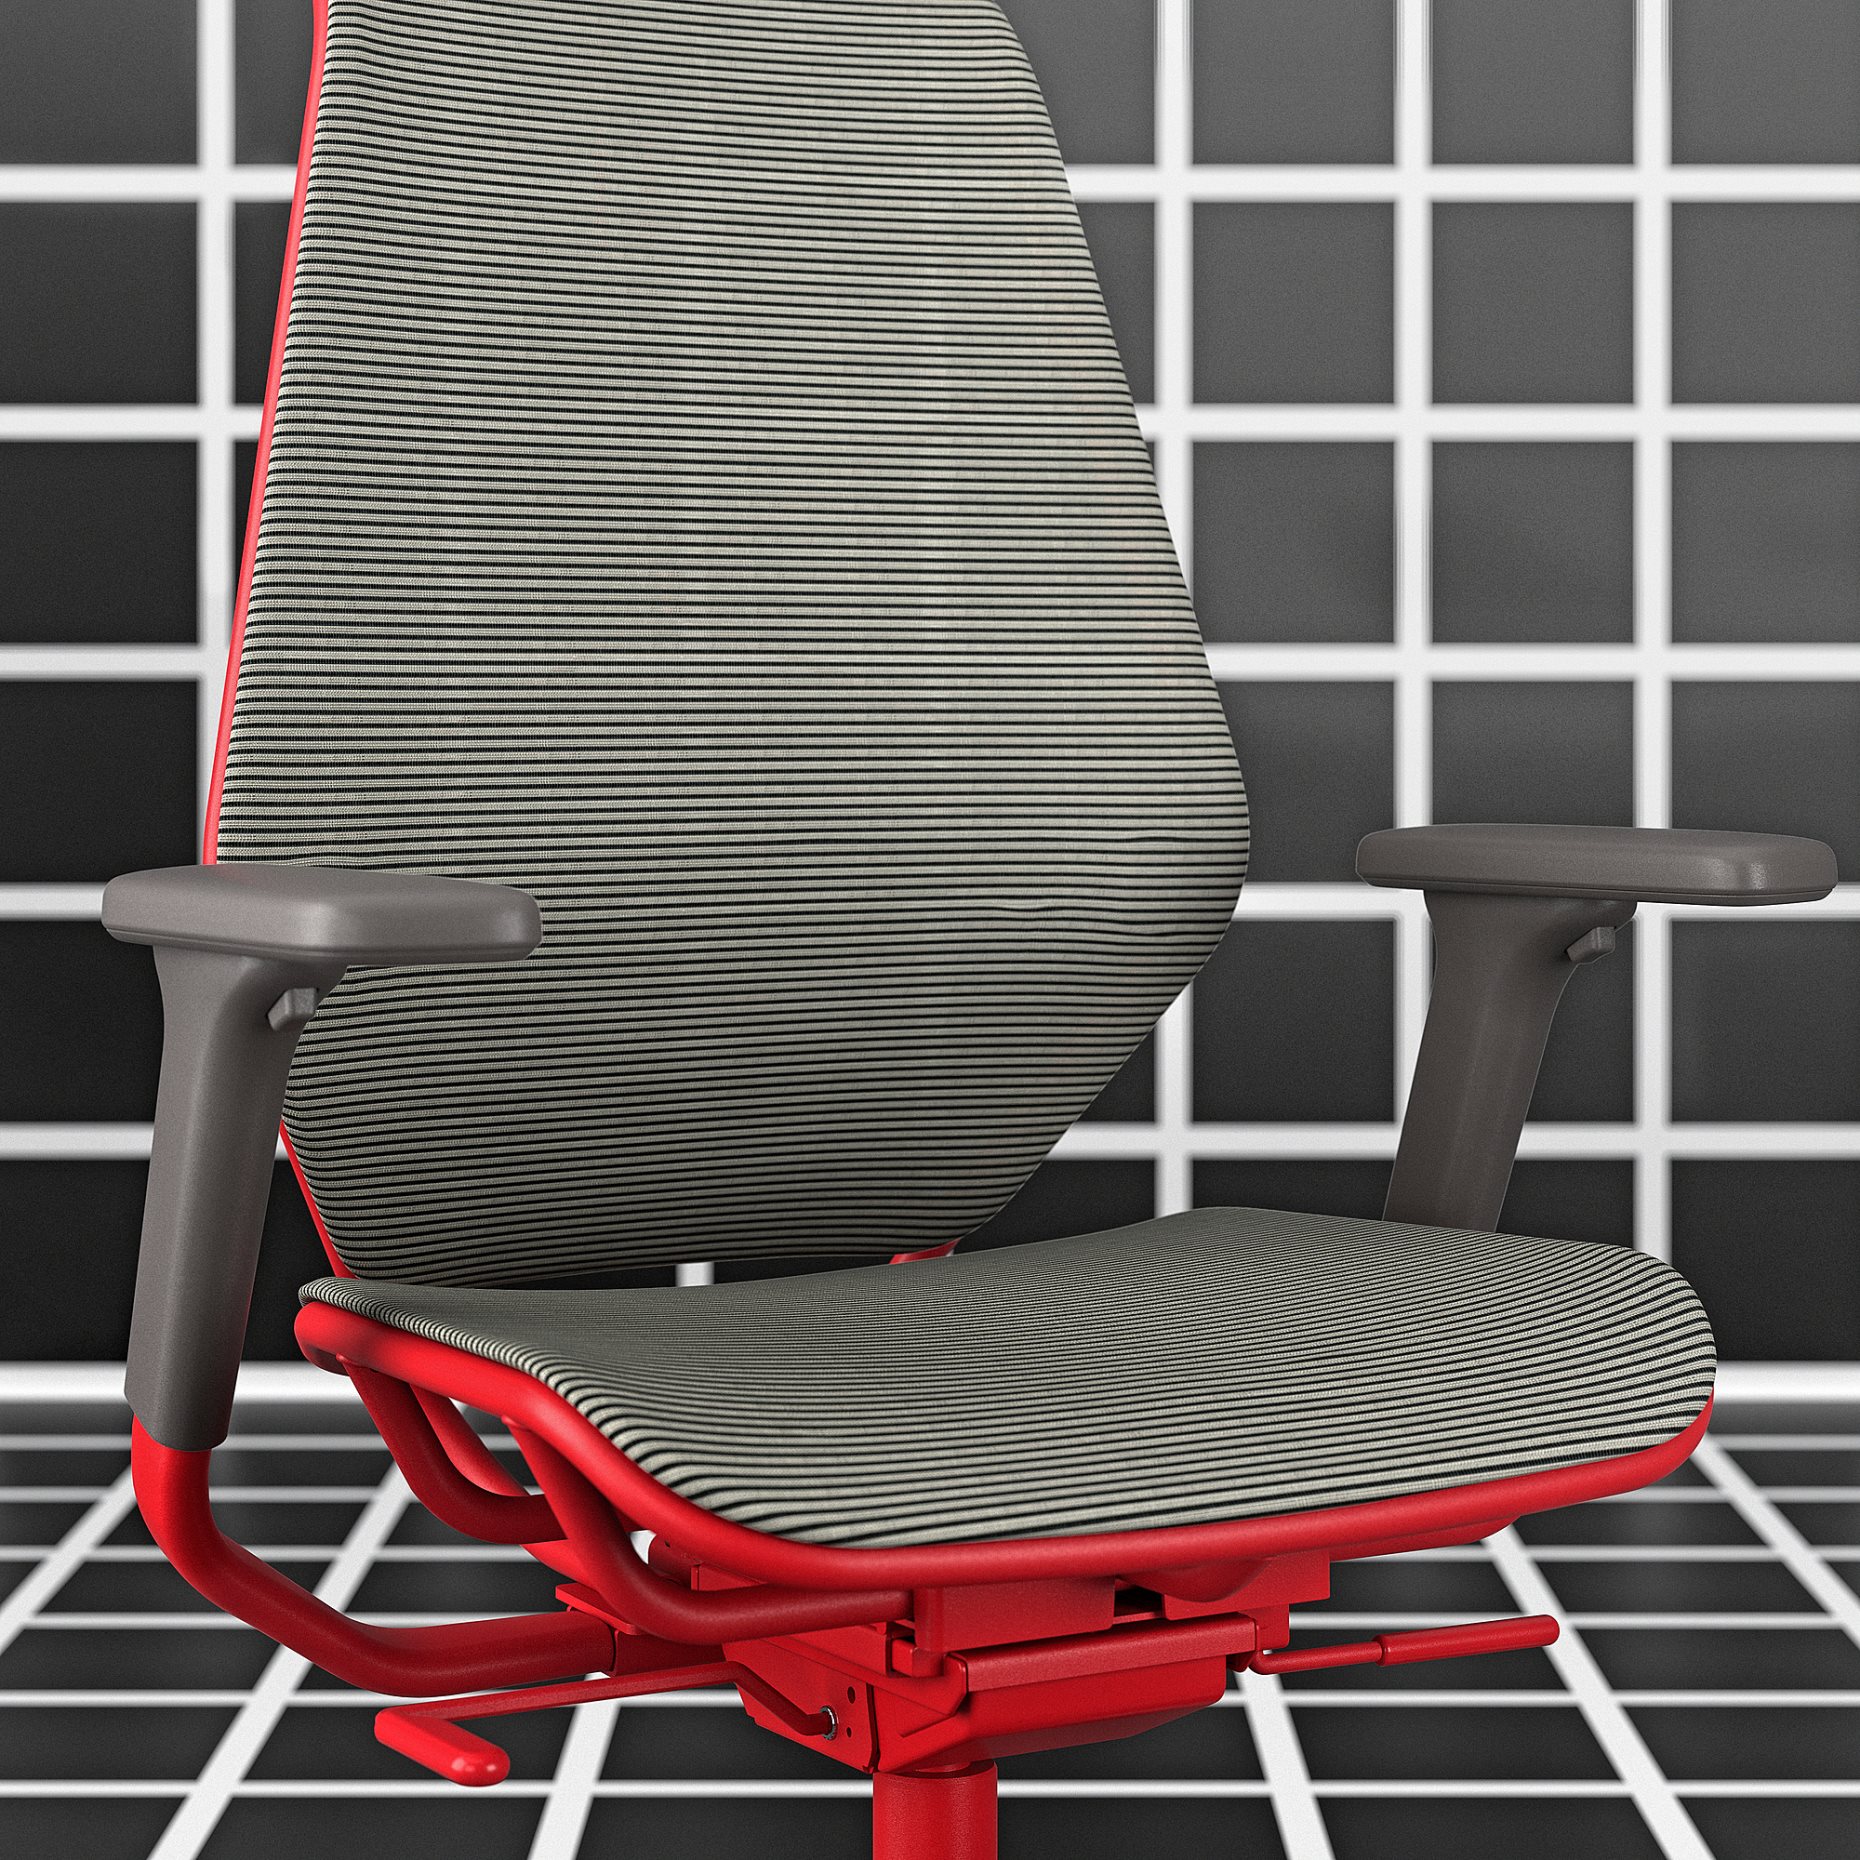 STYRSPEL, gaming chair, 605.260.85